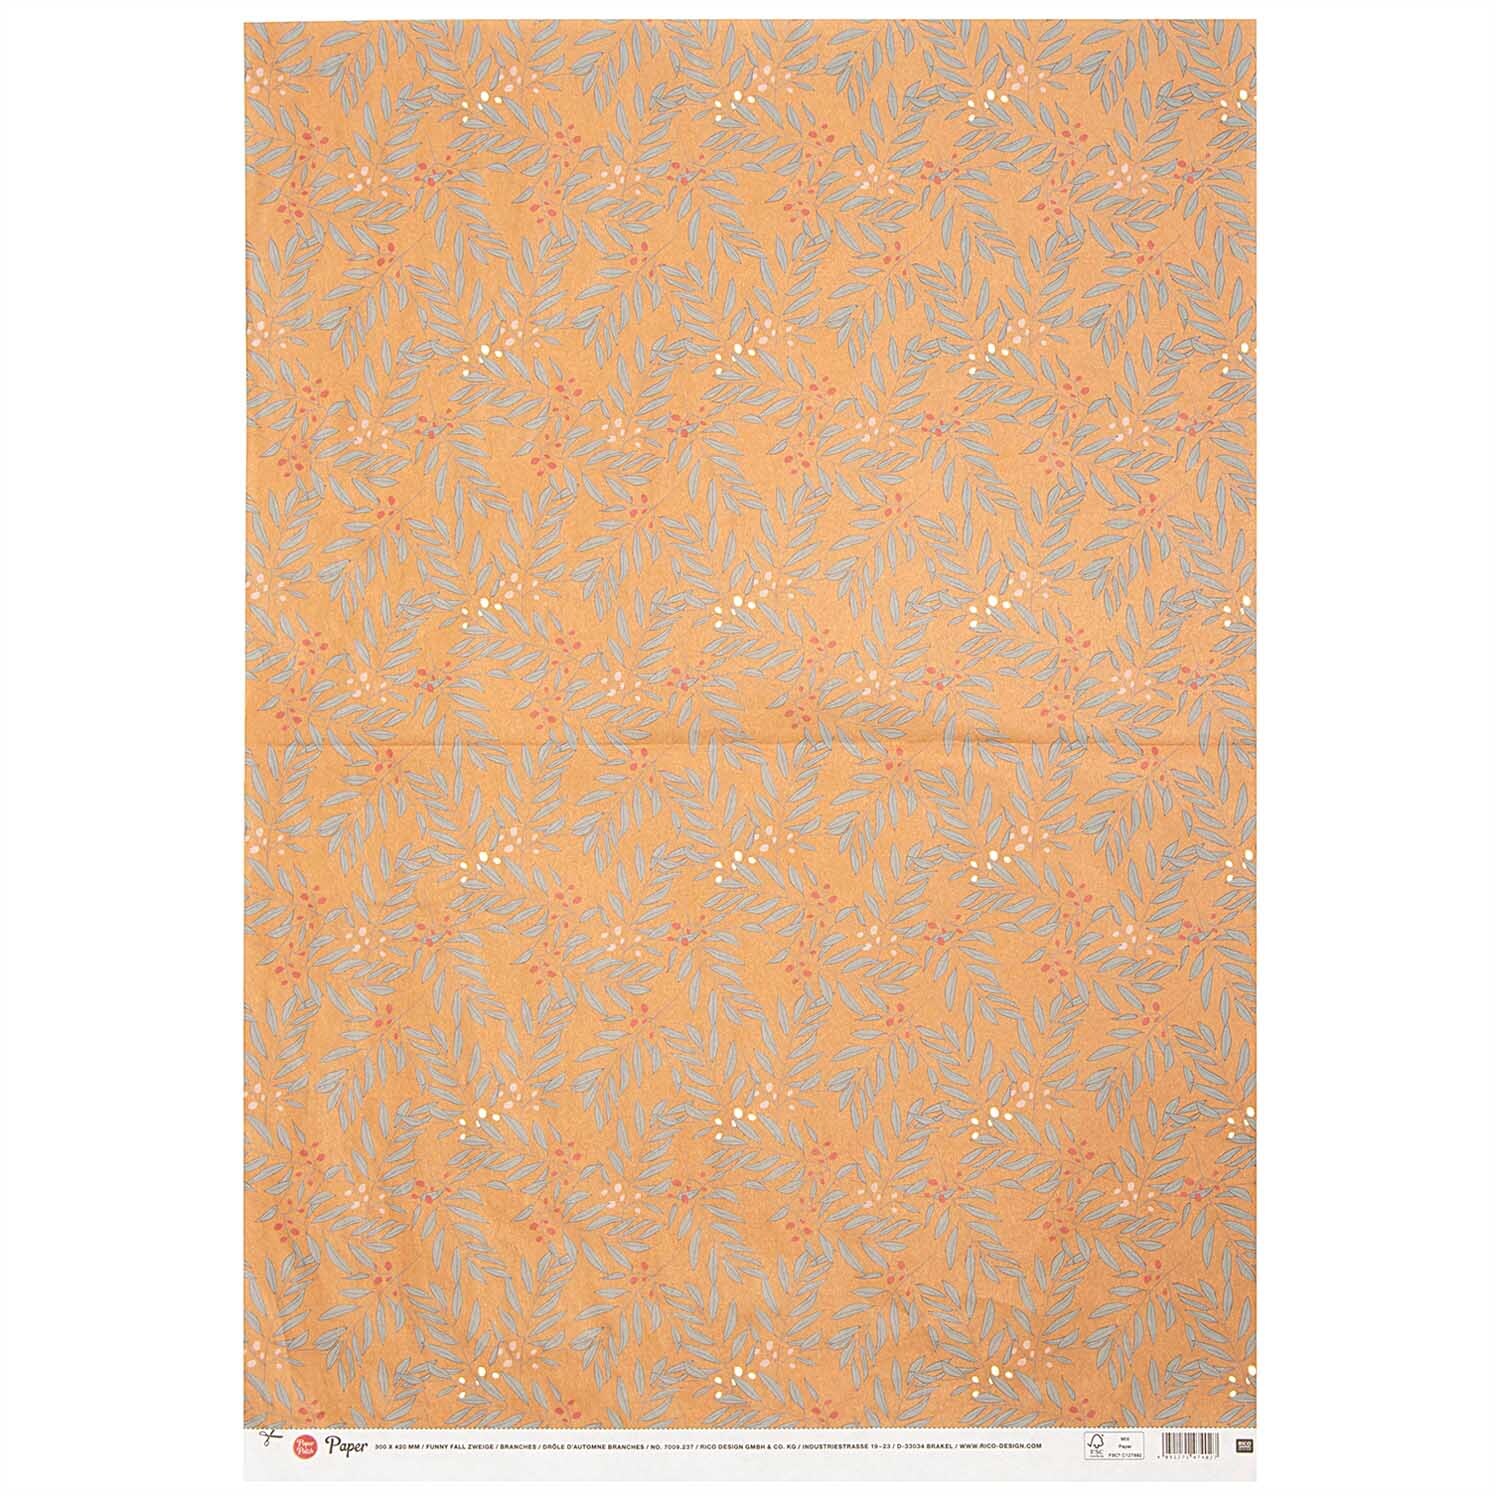 Paper Patch Papier Zweige orange 30x42cm